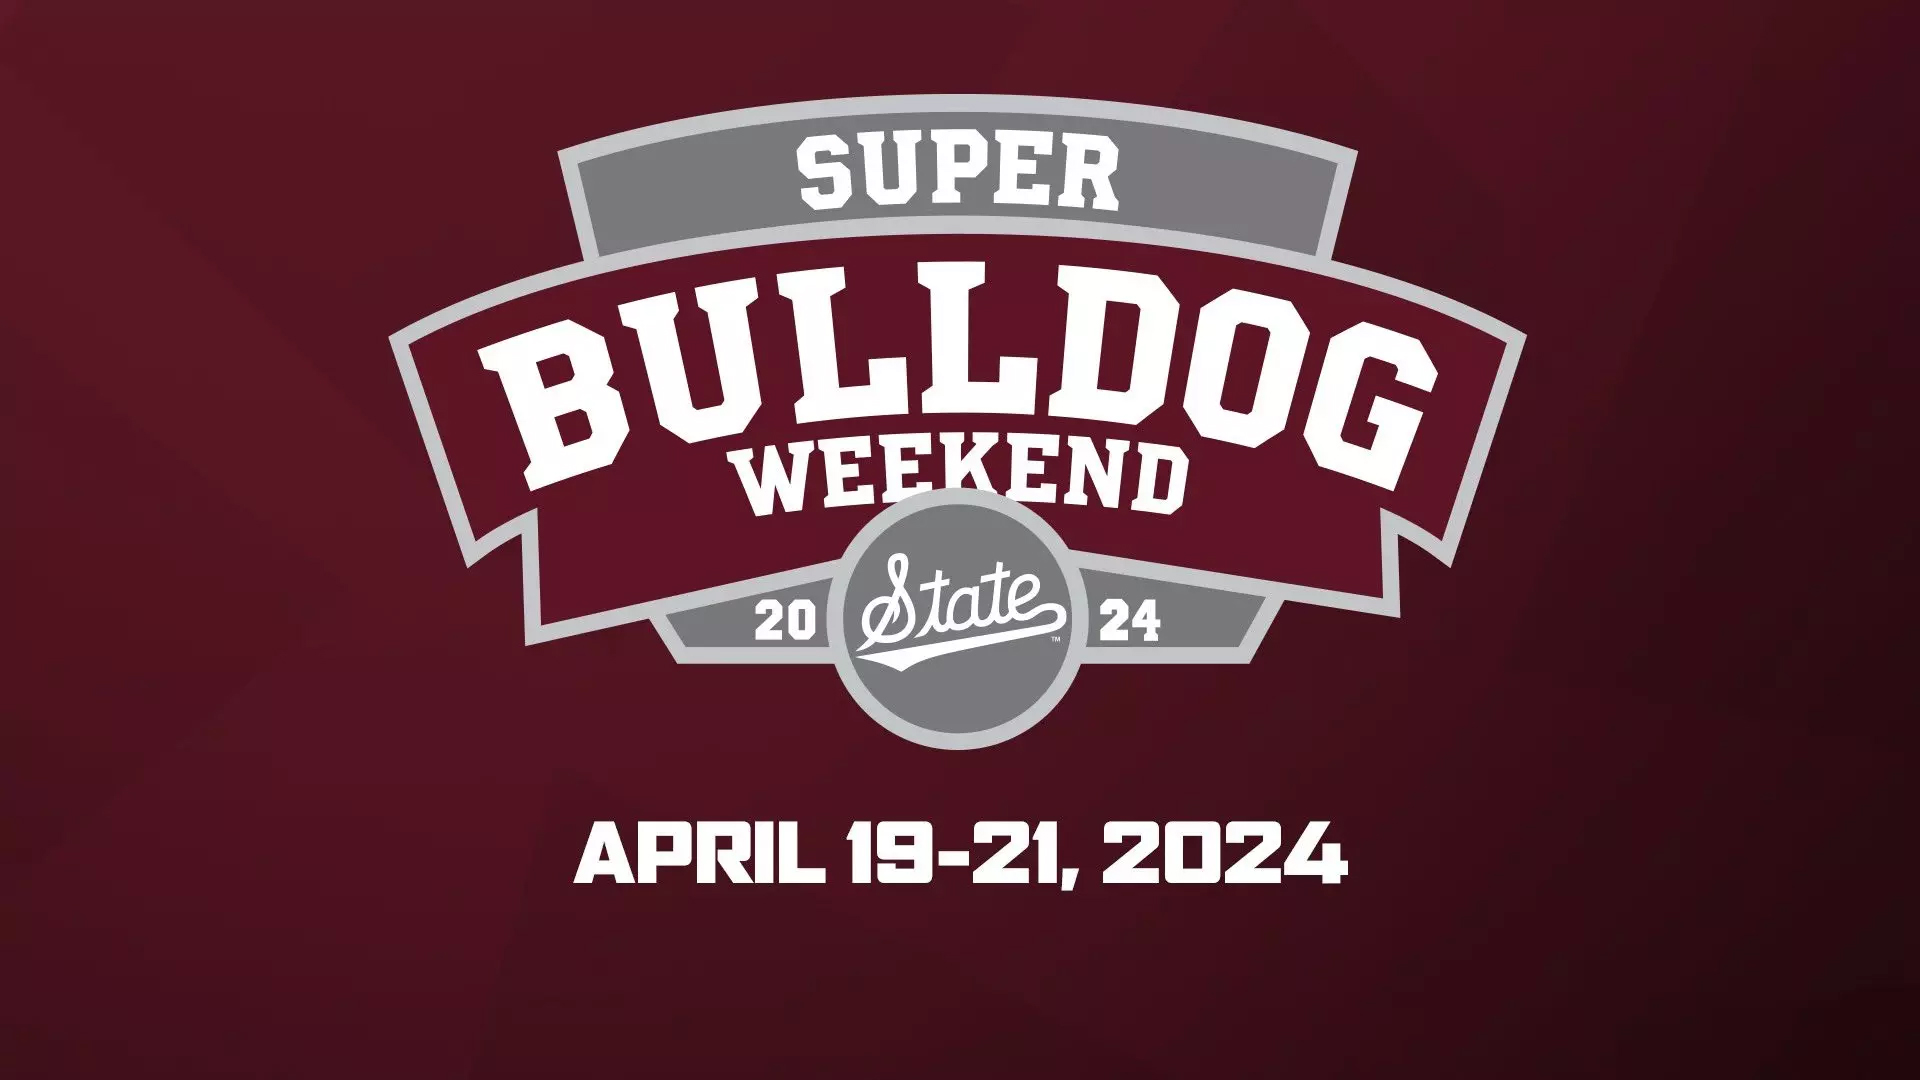 Super Bulldog Weekend graphic